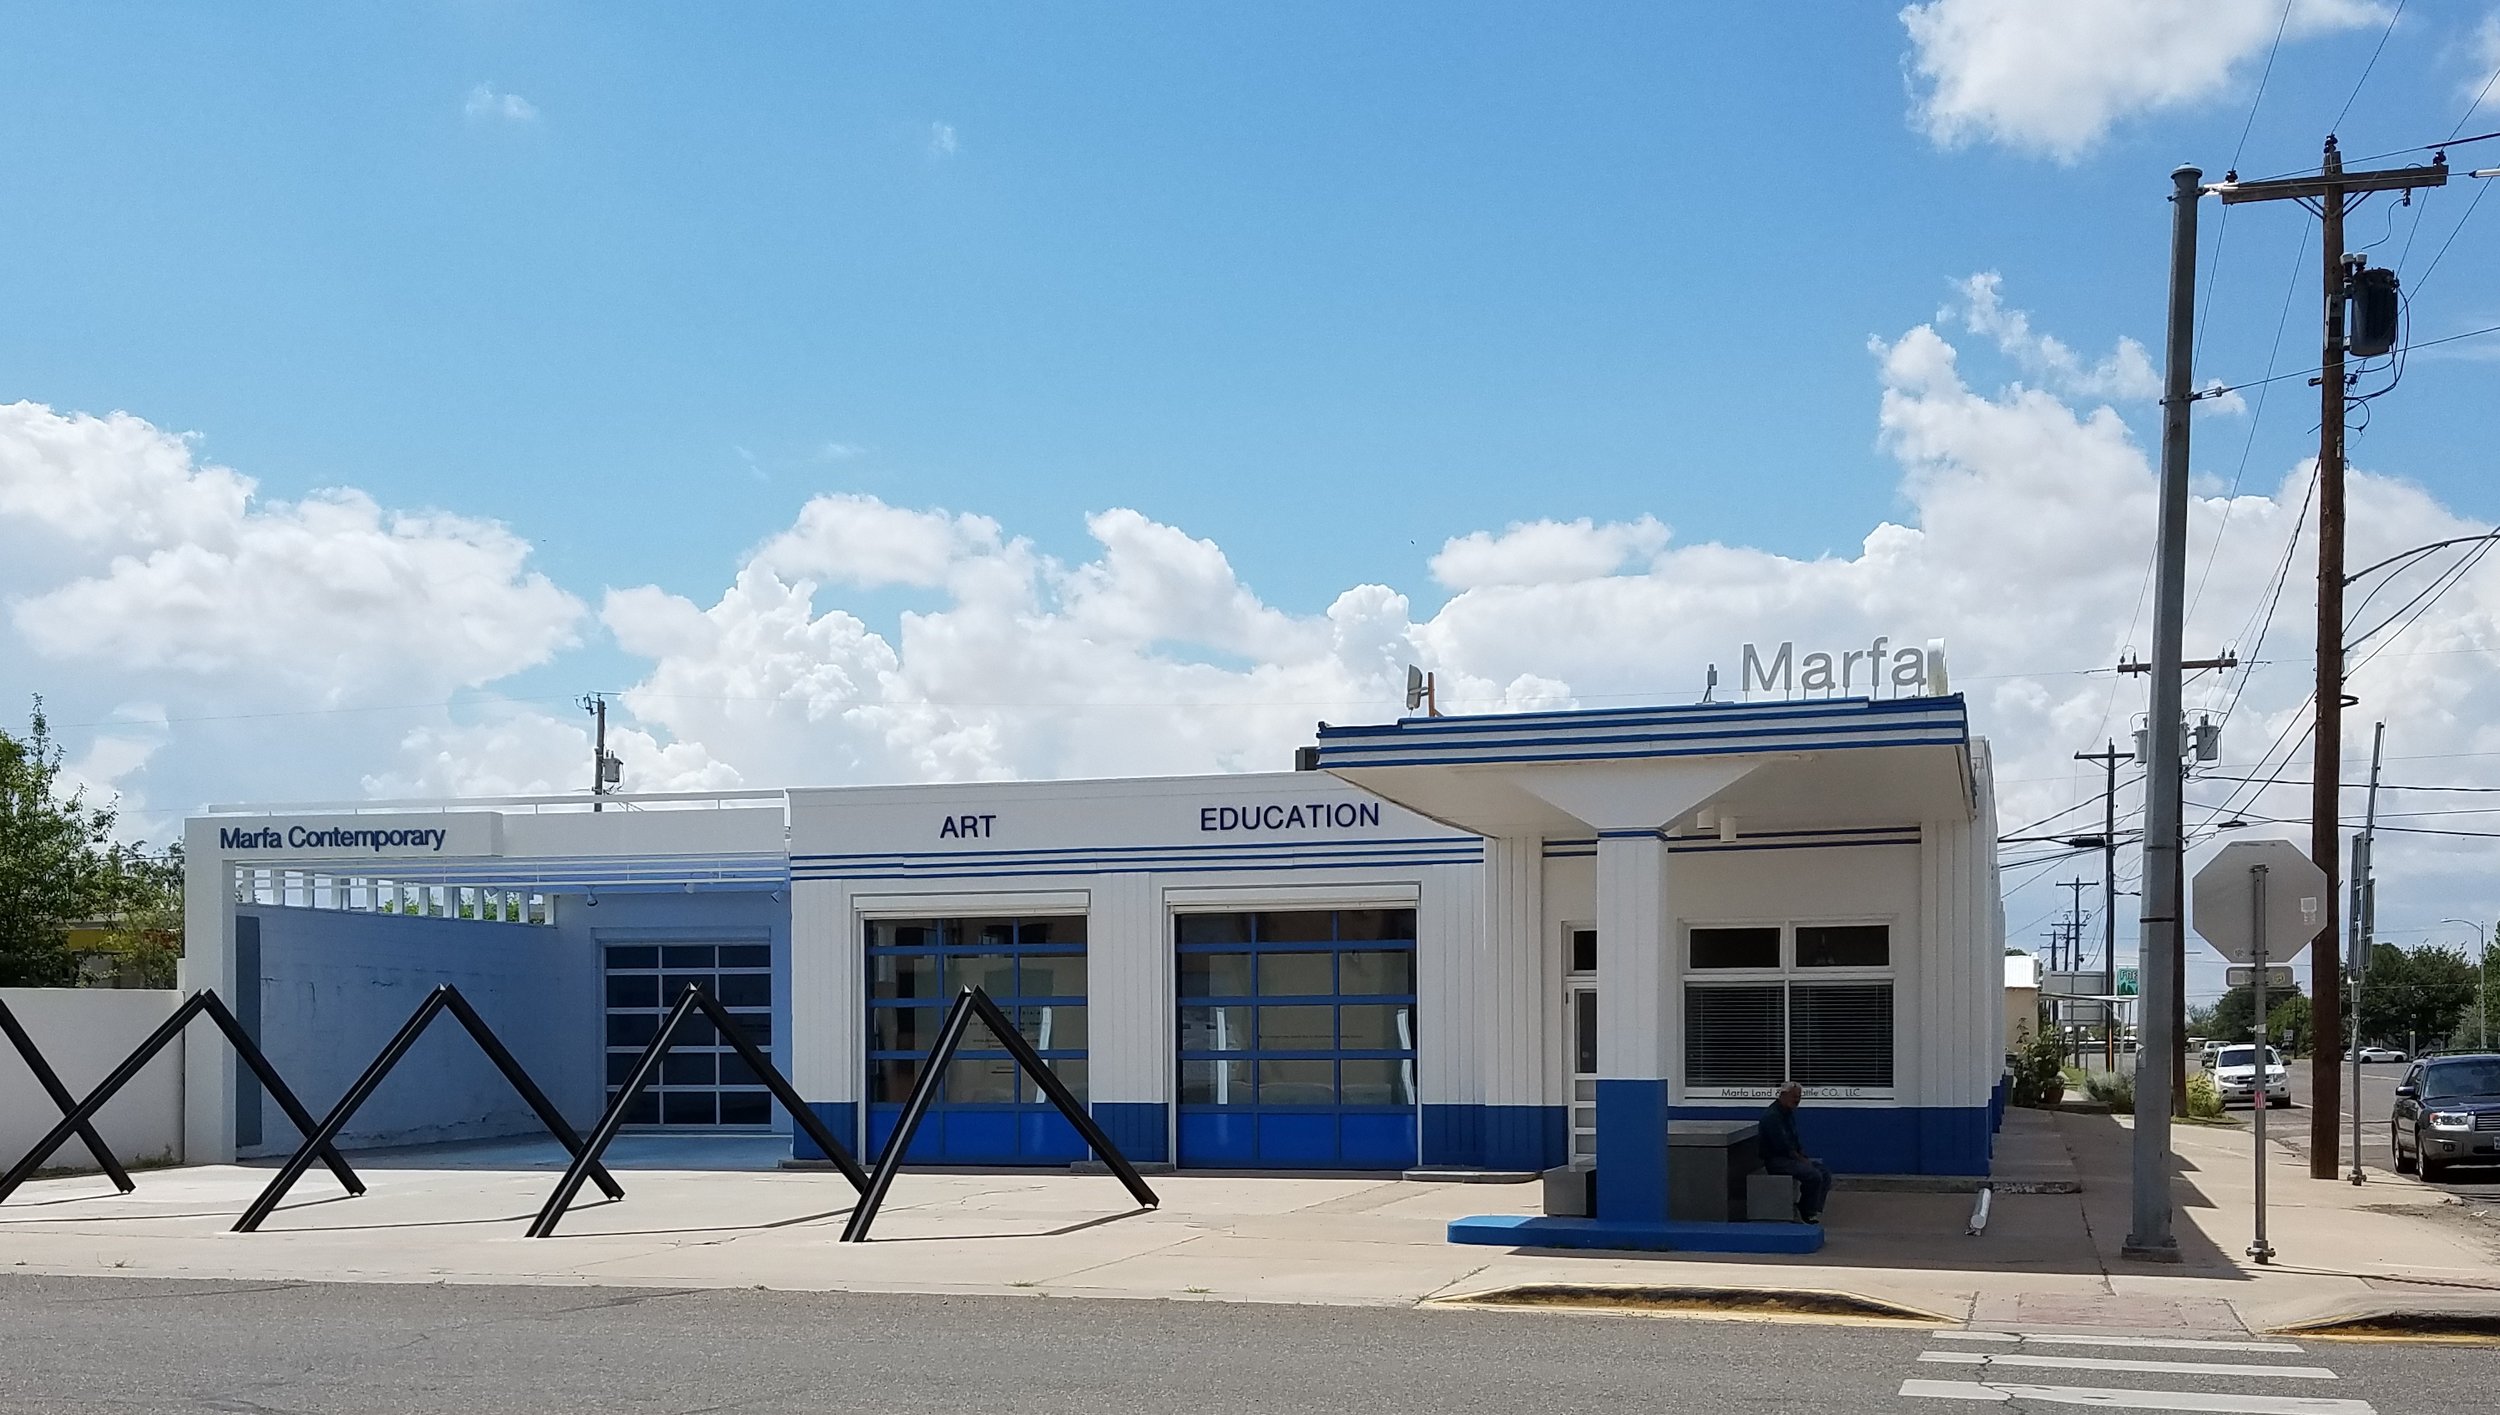 Marfa, Texas ingenuity: Gas station repurposed as an art museum.